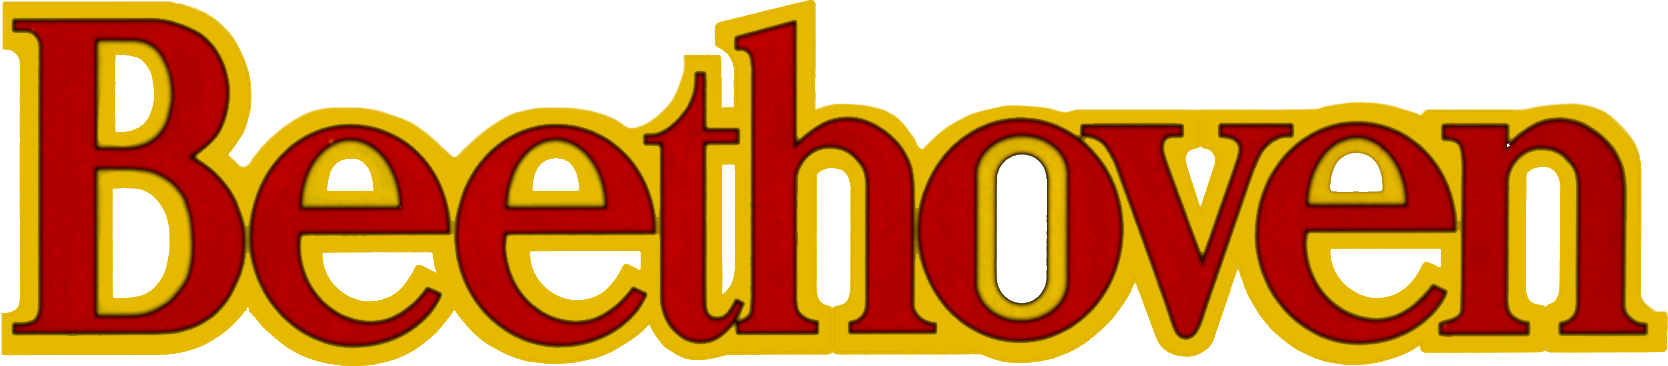 beethoven movie logo